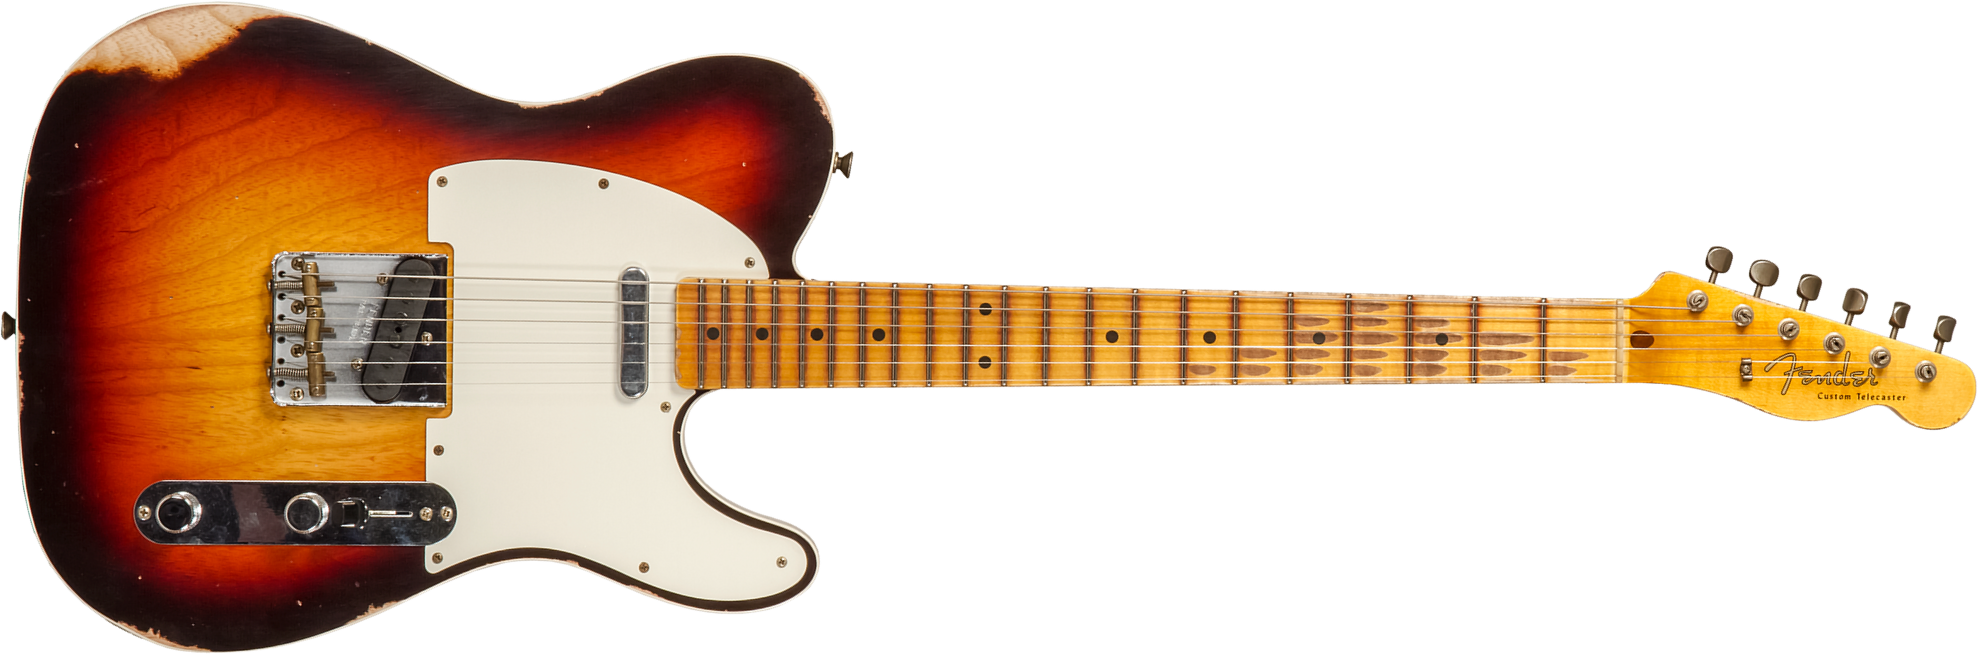 Fender Custom Shop Tele Custom 1959 2s Ht Mn #cz573750 - Relic Chocolate 3-color Sunburst - E-Gitarre in Teleform - Main picture